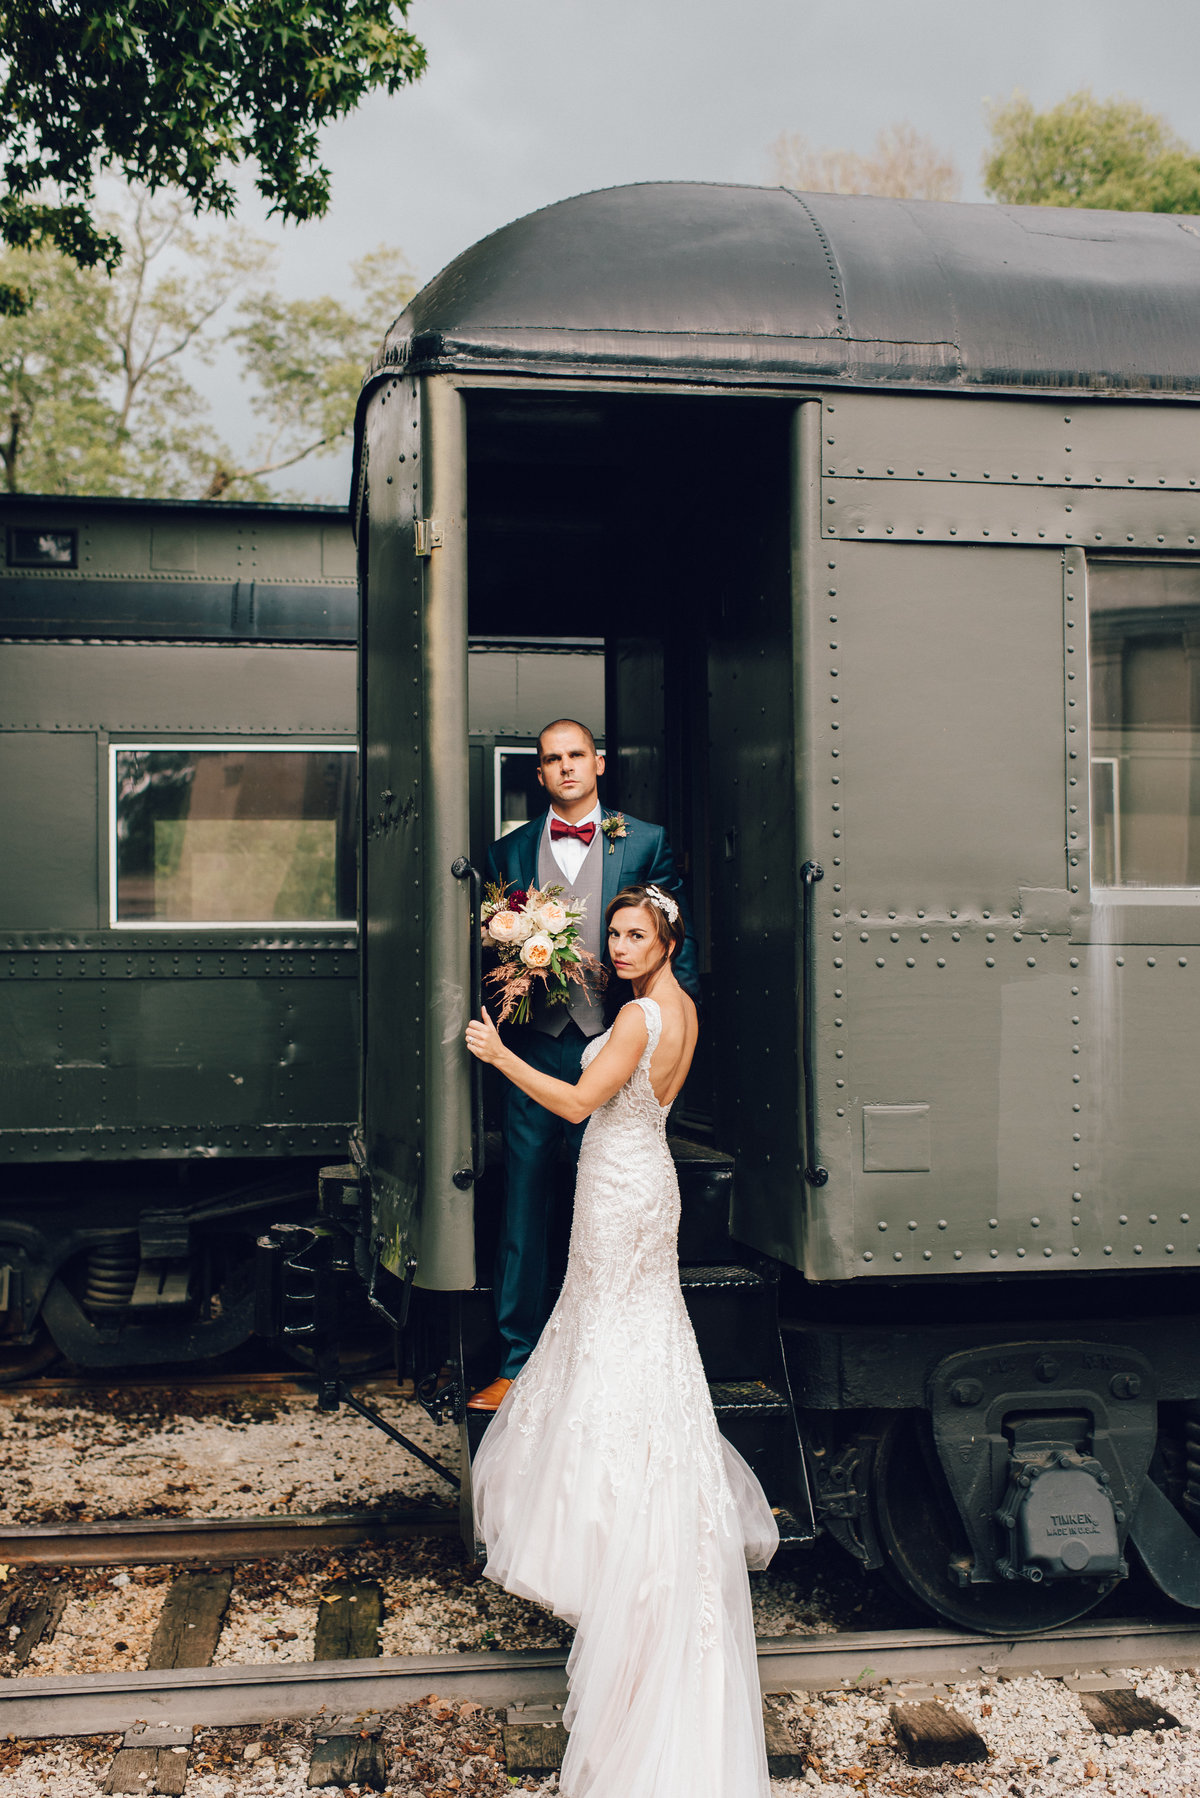 Bride and groom on train